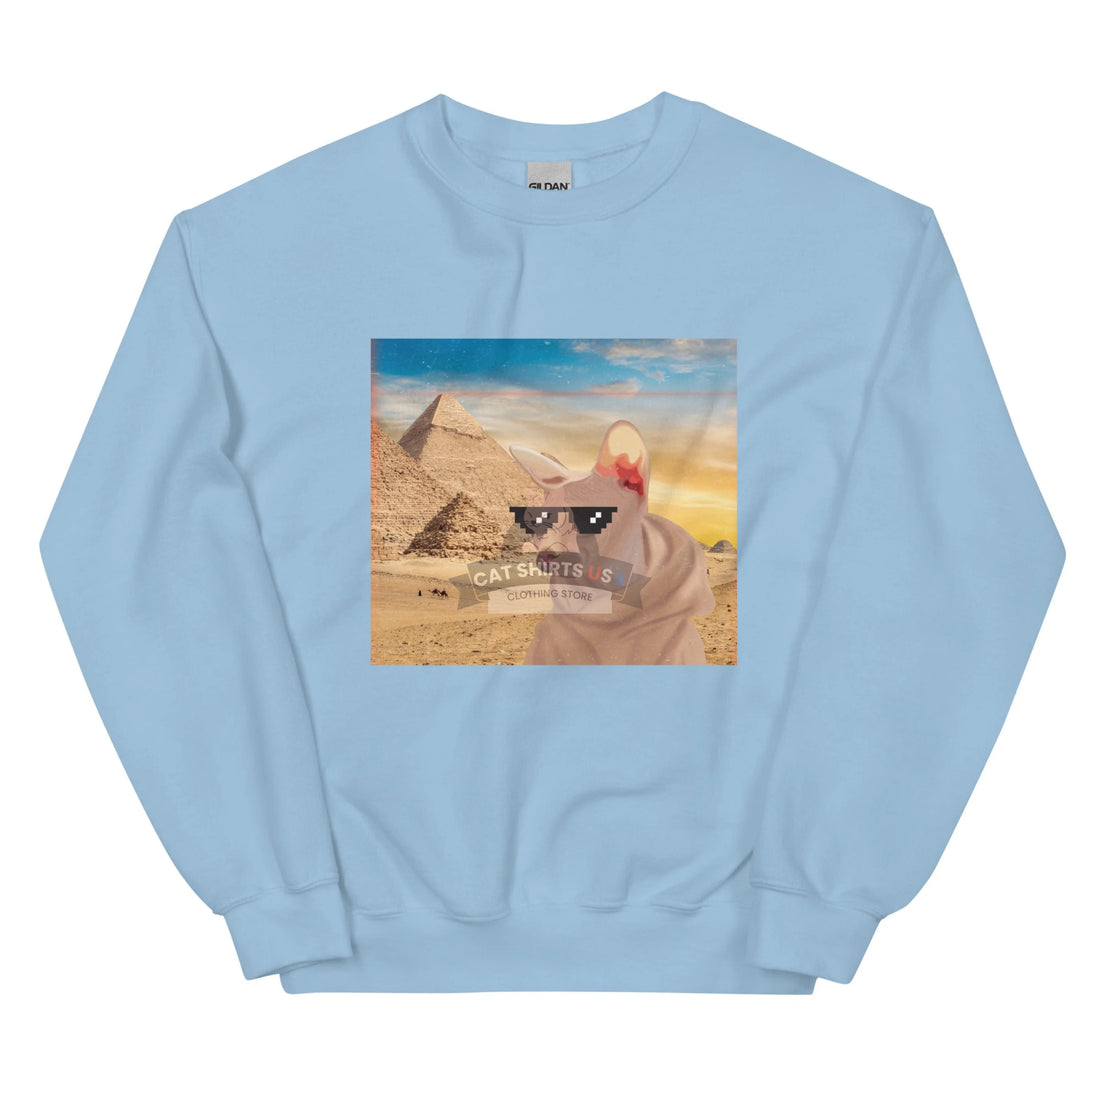 Cool Egypt Cat Sweatshirt | Cat Shirts USA